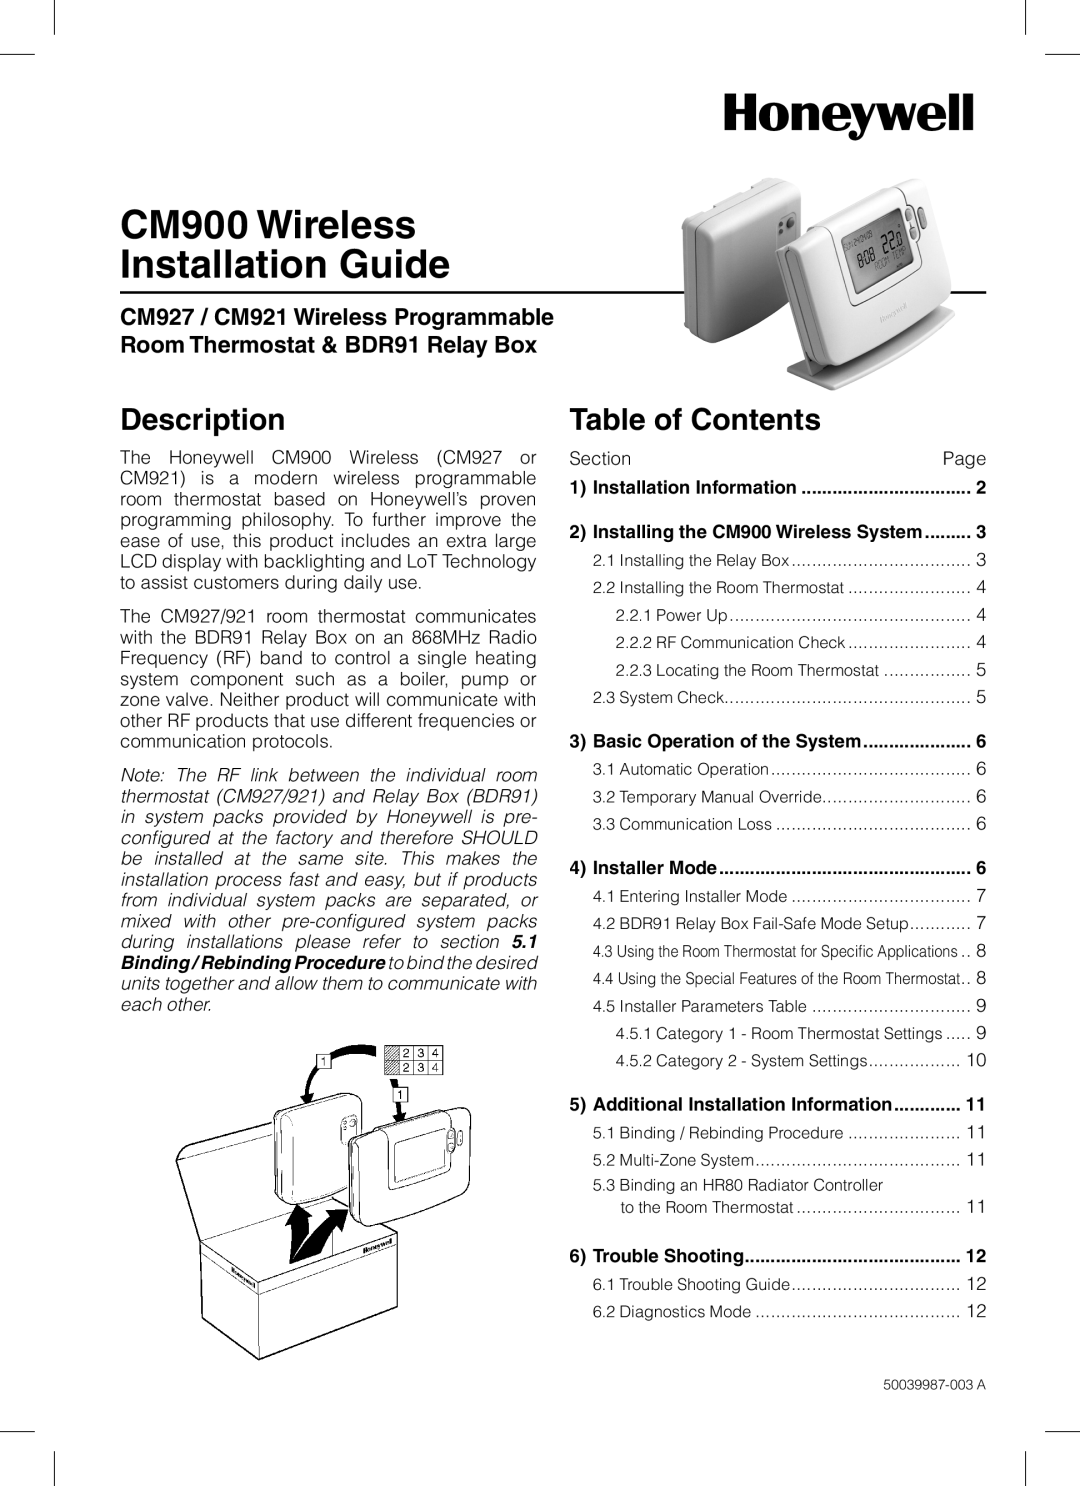 Honeywell CM900 manual Description, Table of Contents 